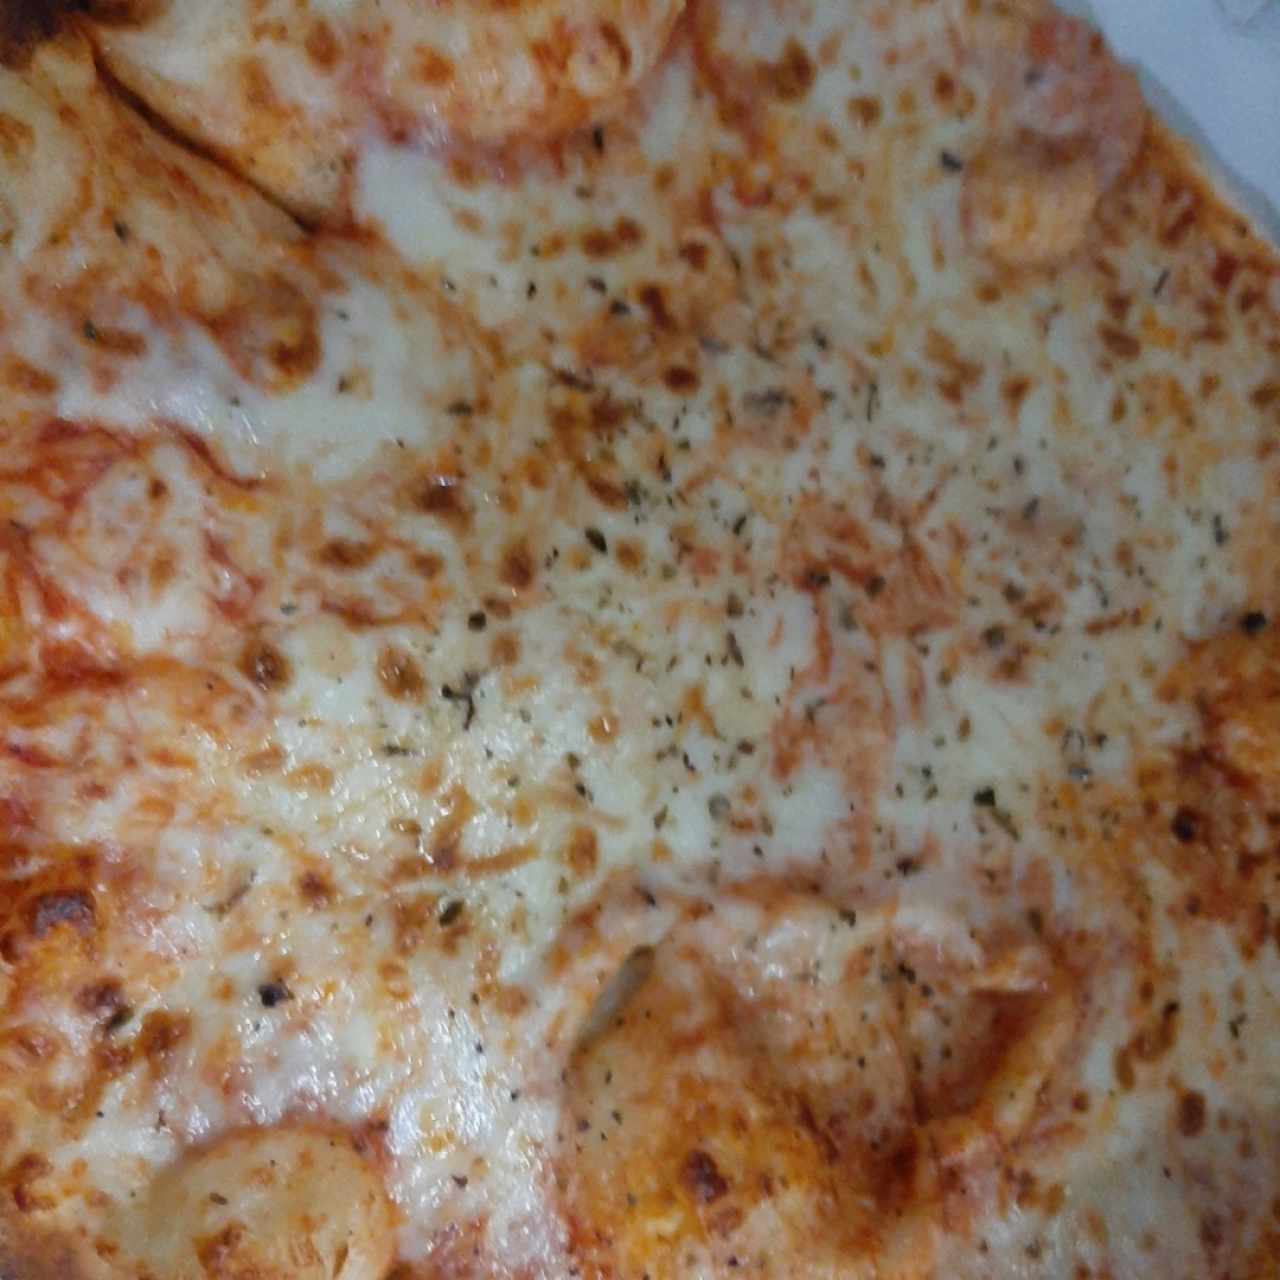 Pizza Margarita tamaño mediano